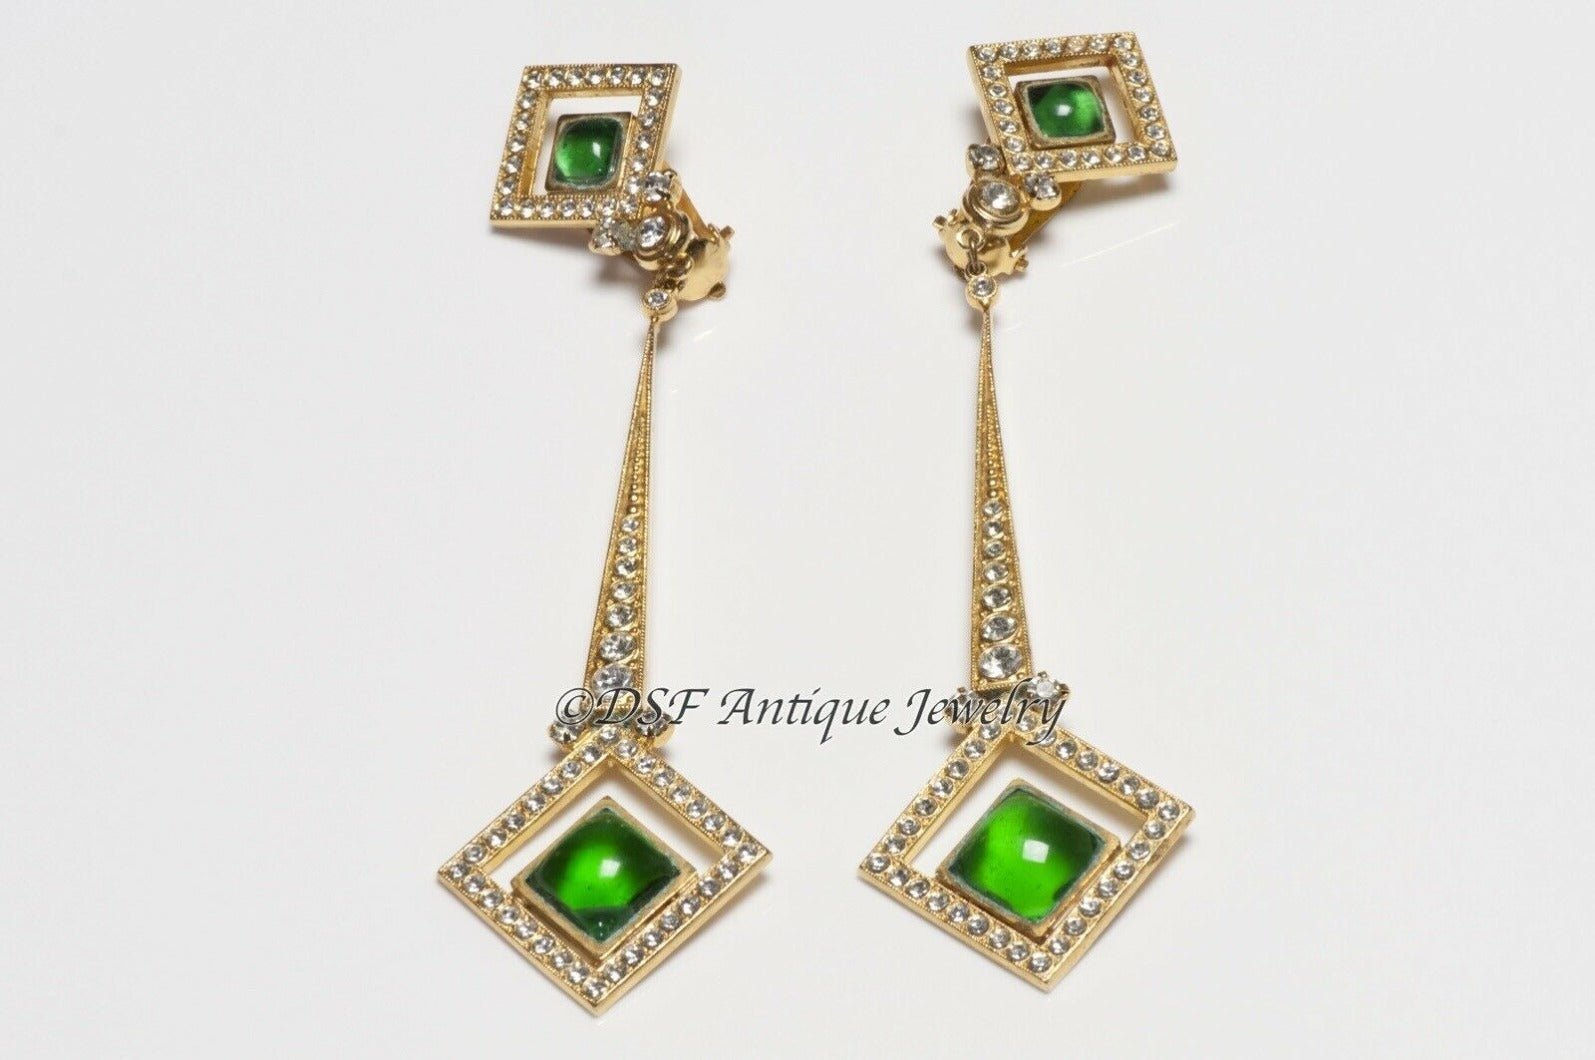 Vintage Butler & Wilson Long Green Poured Glass Crystal Earrings